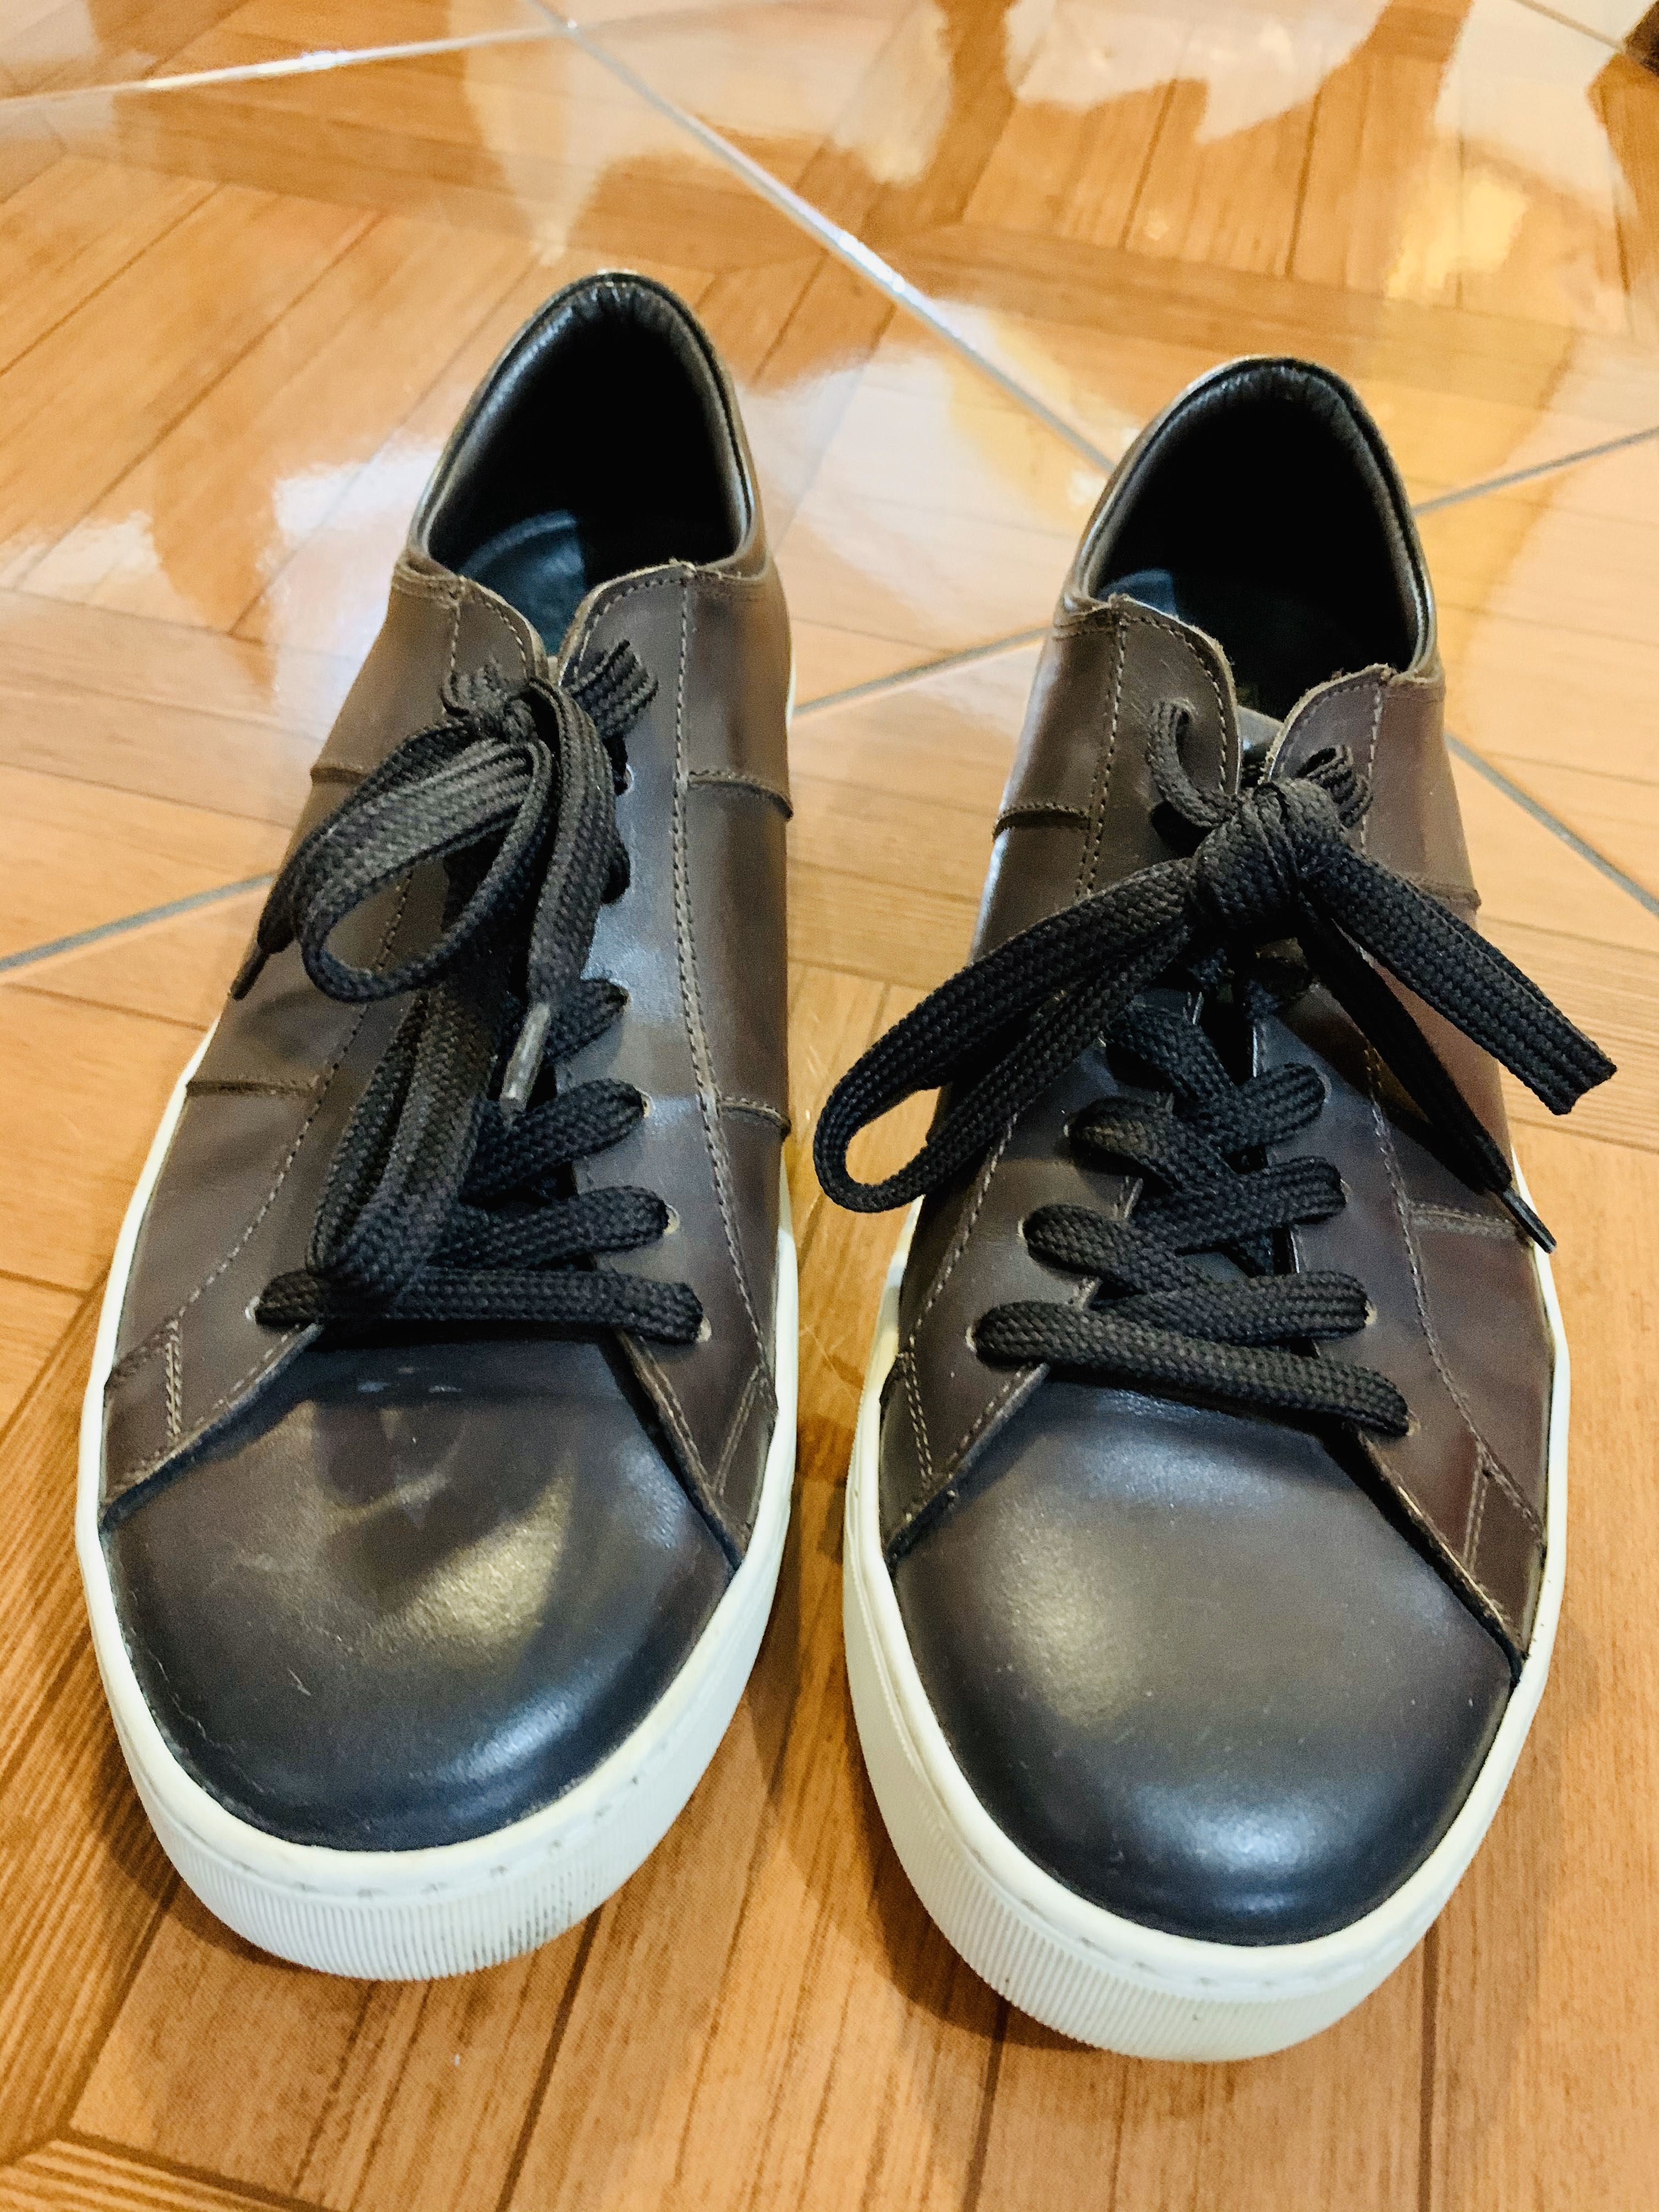 bruno magli leather sneakers